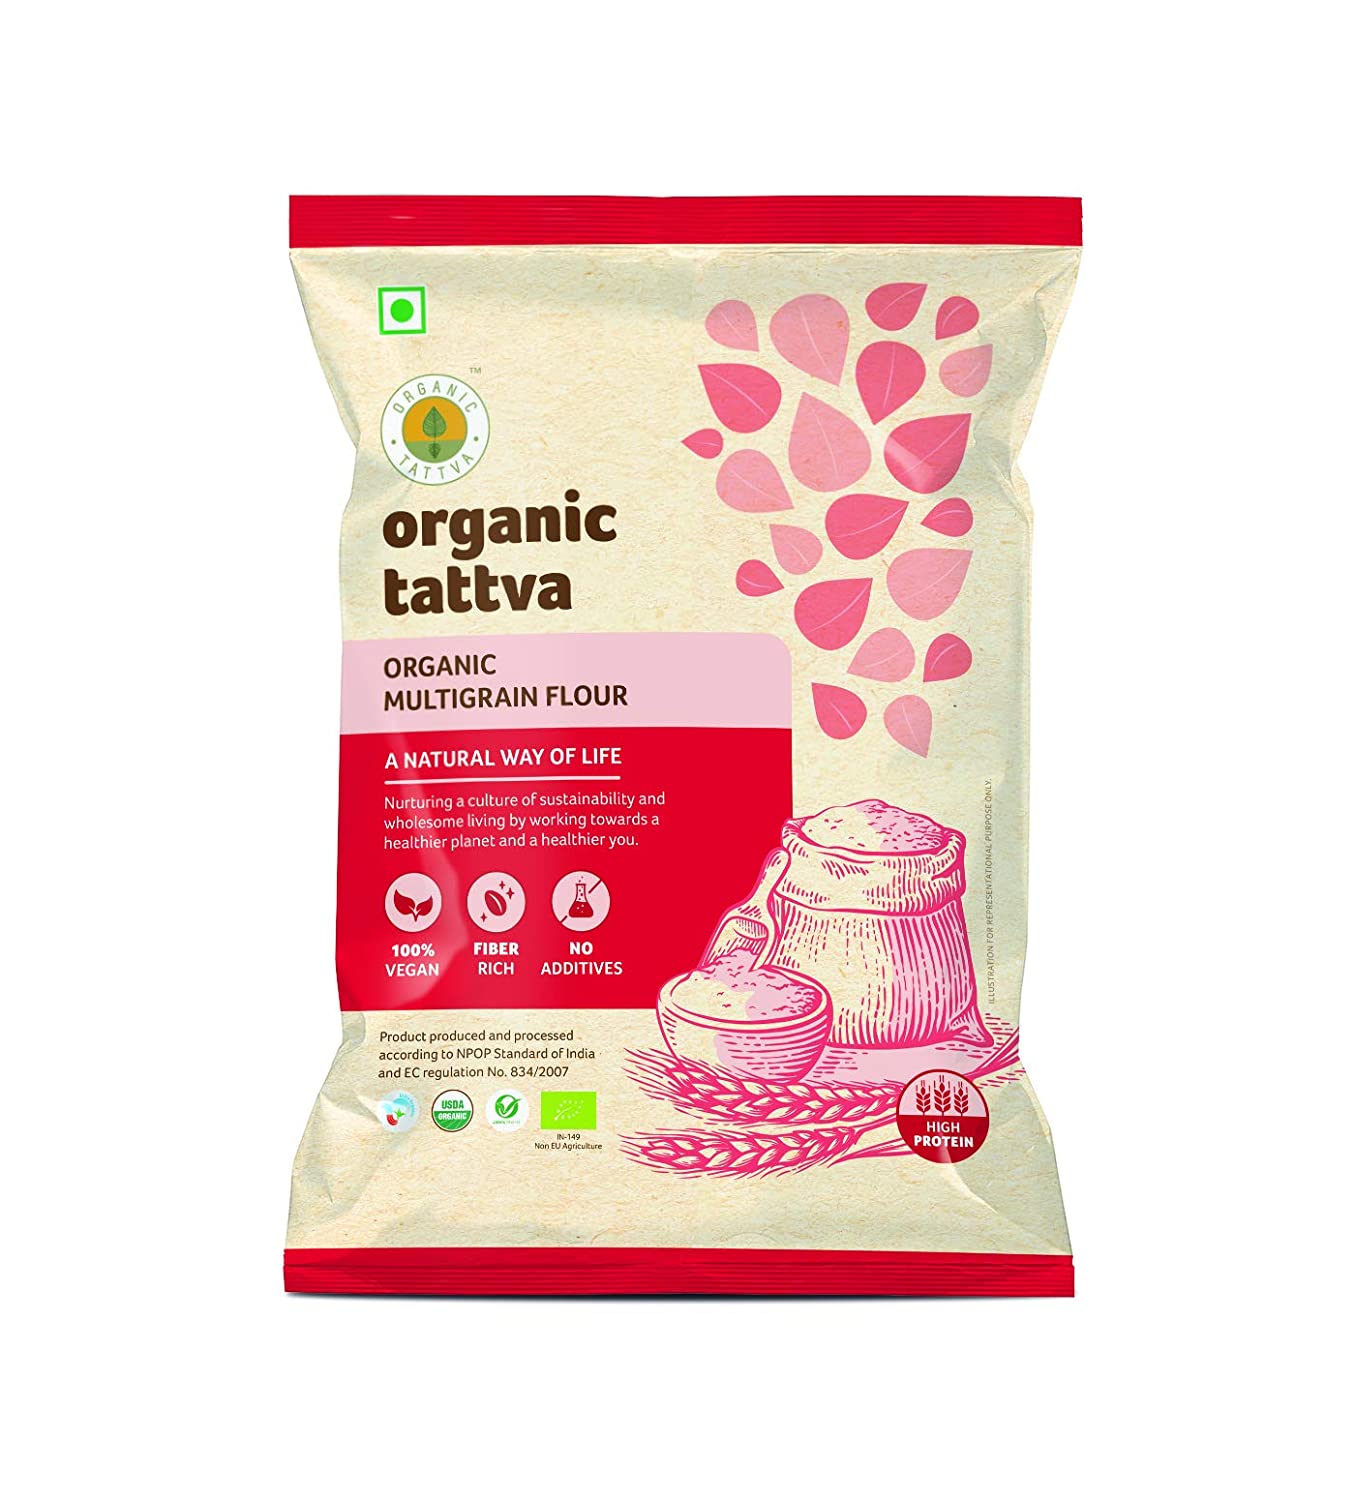 Organic Tattva Multigrain Flour Image